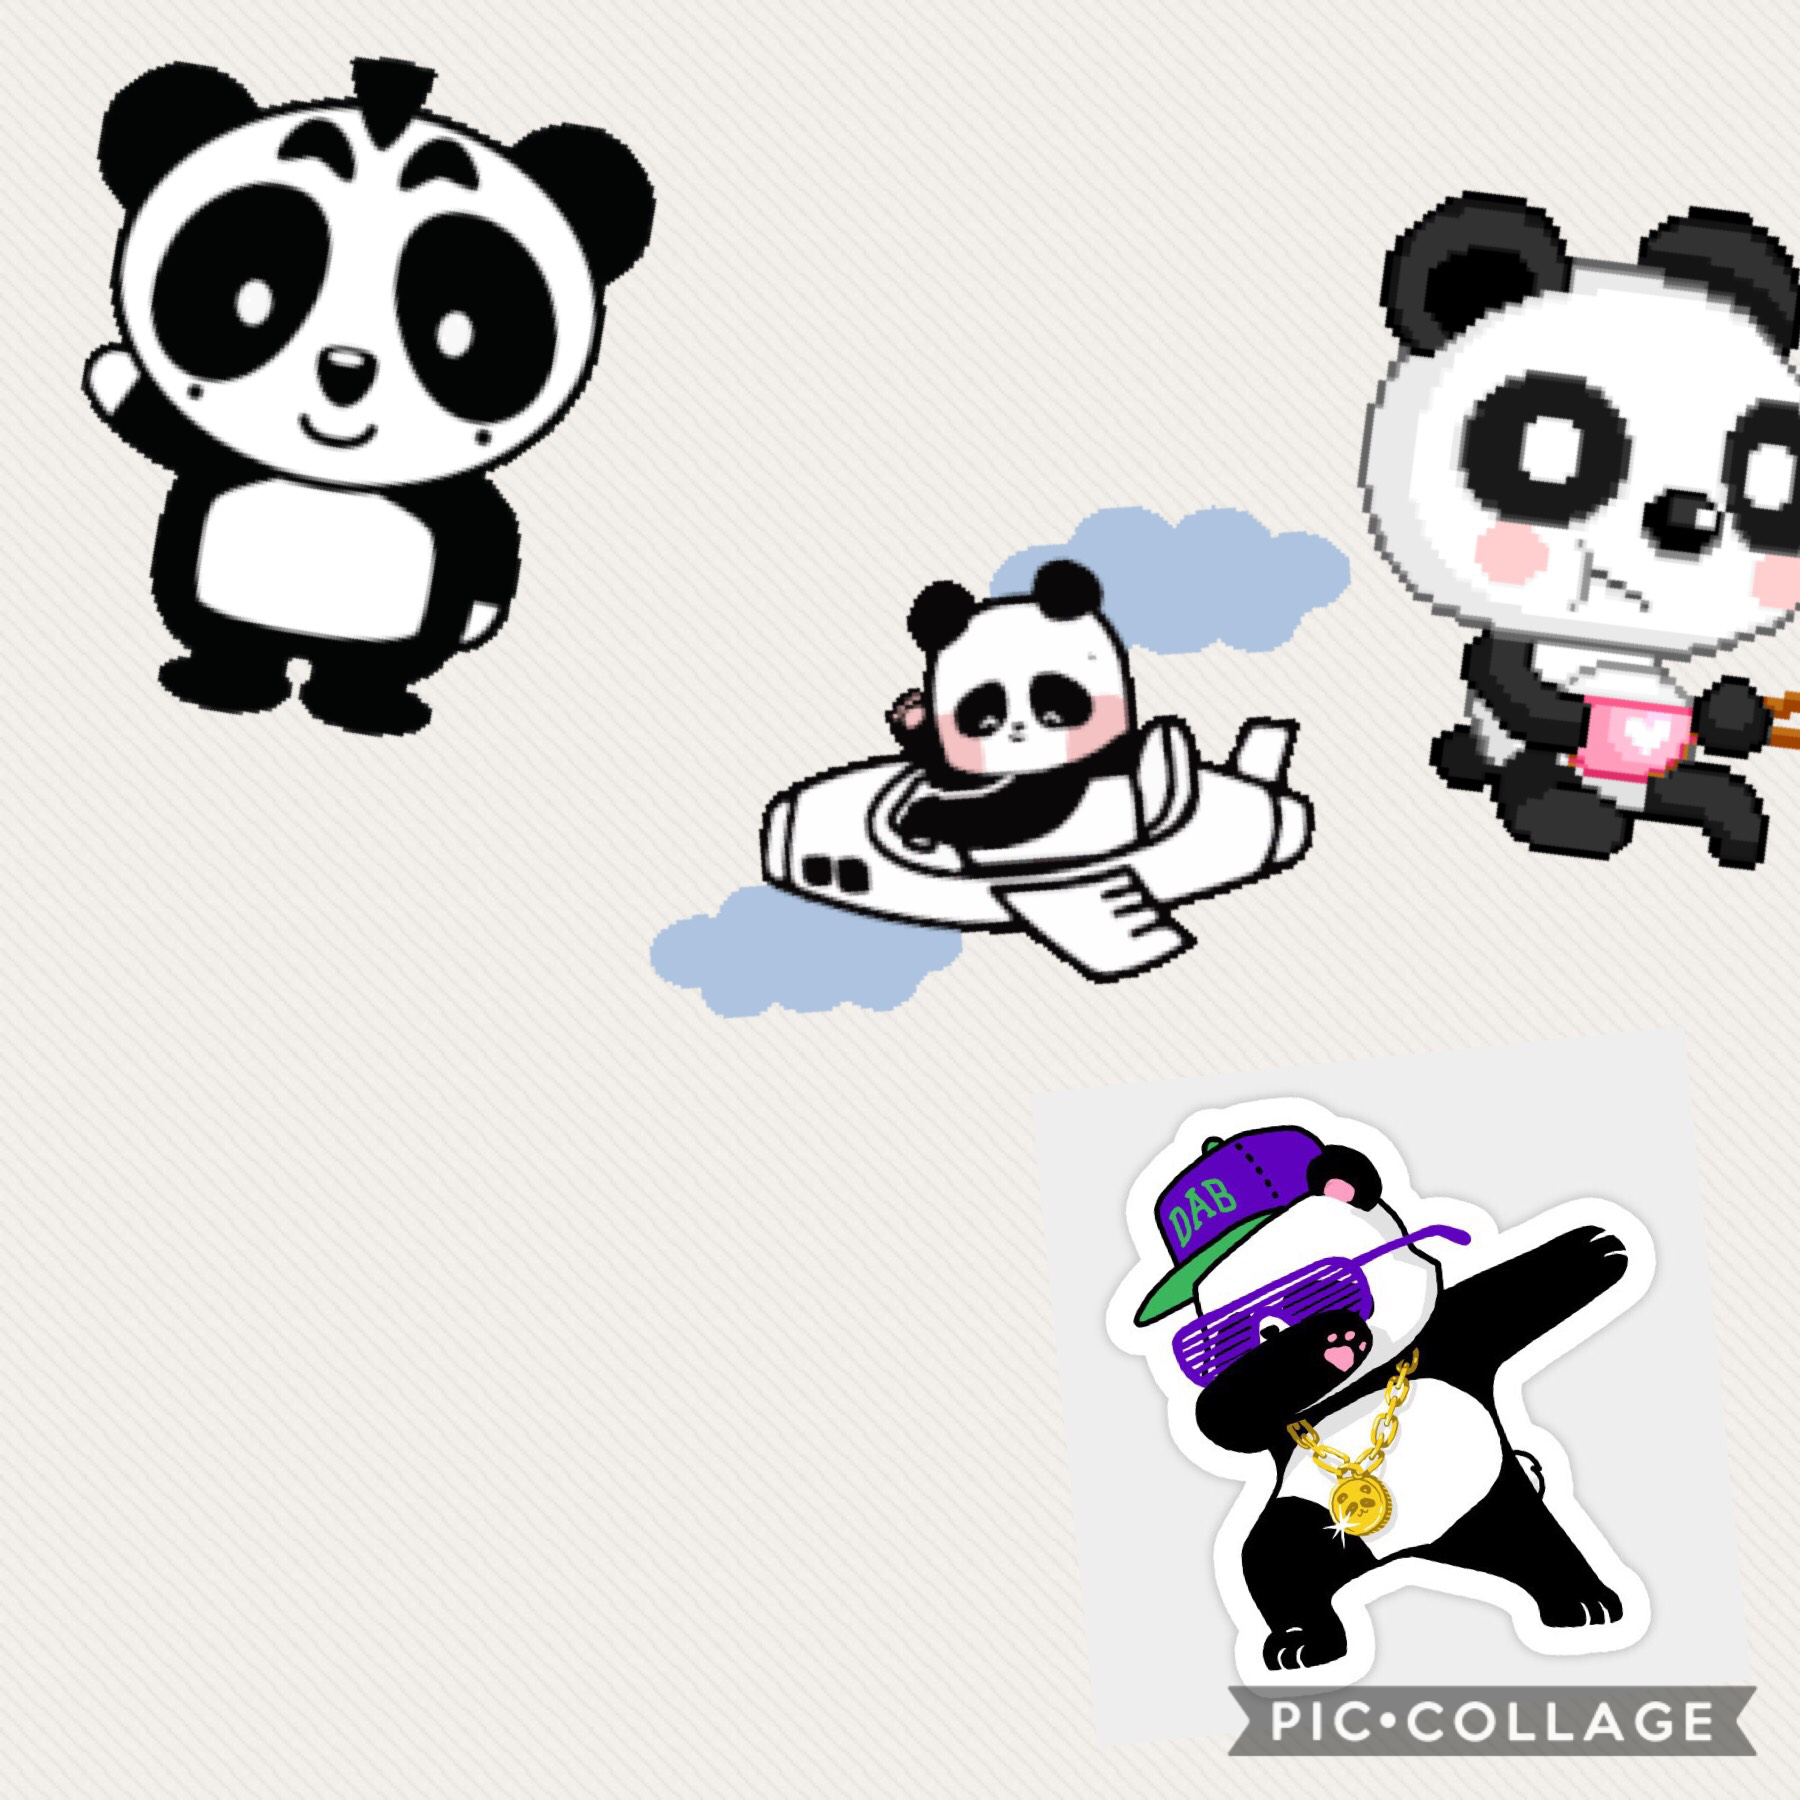 Like if you love 💖 pandas